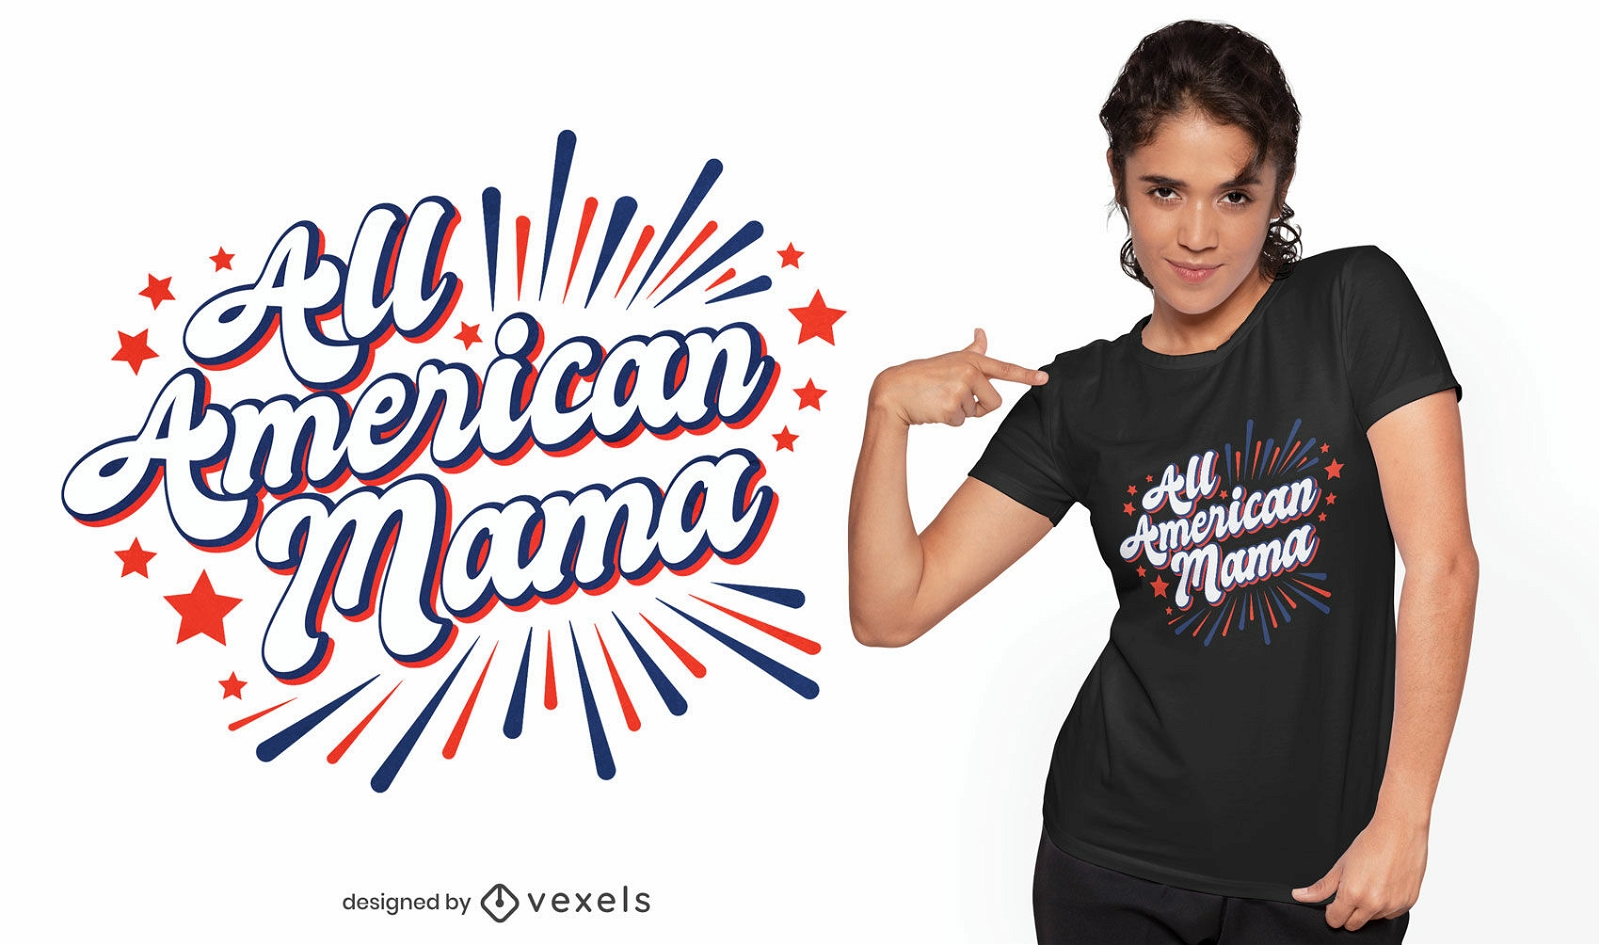 All american mama t-shirt design